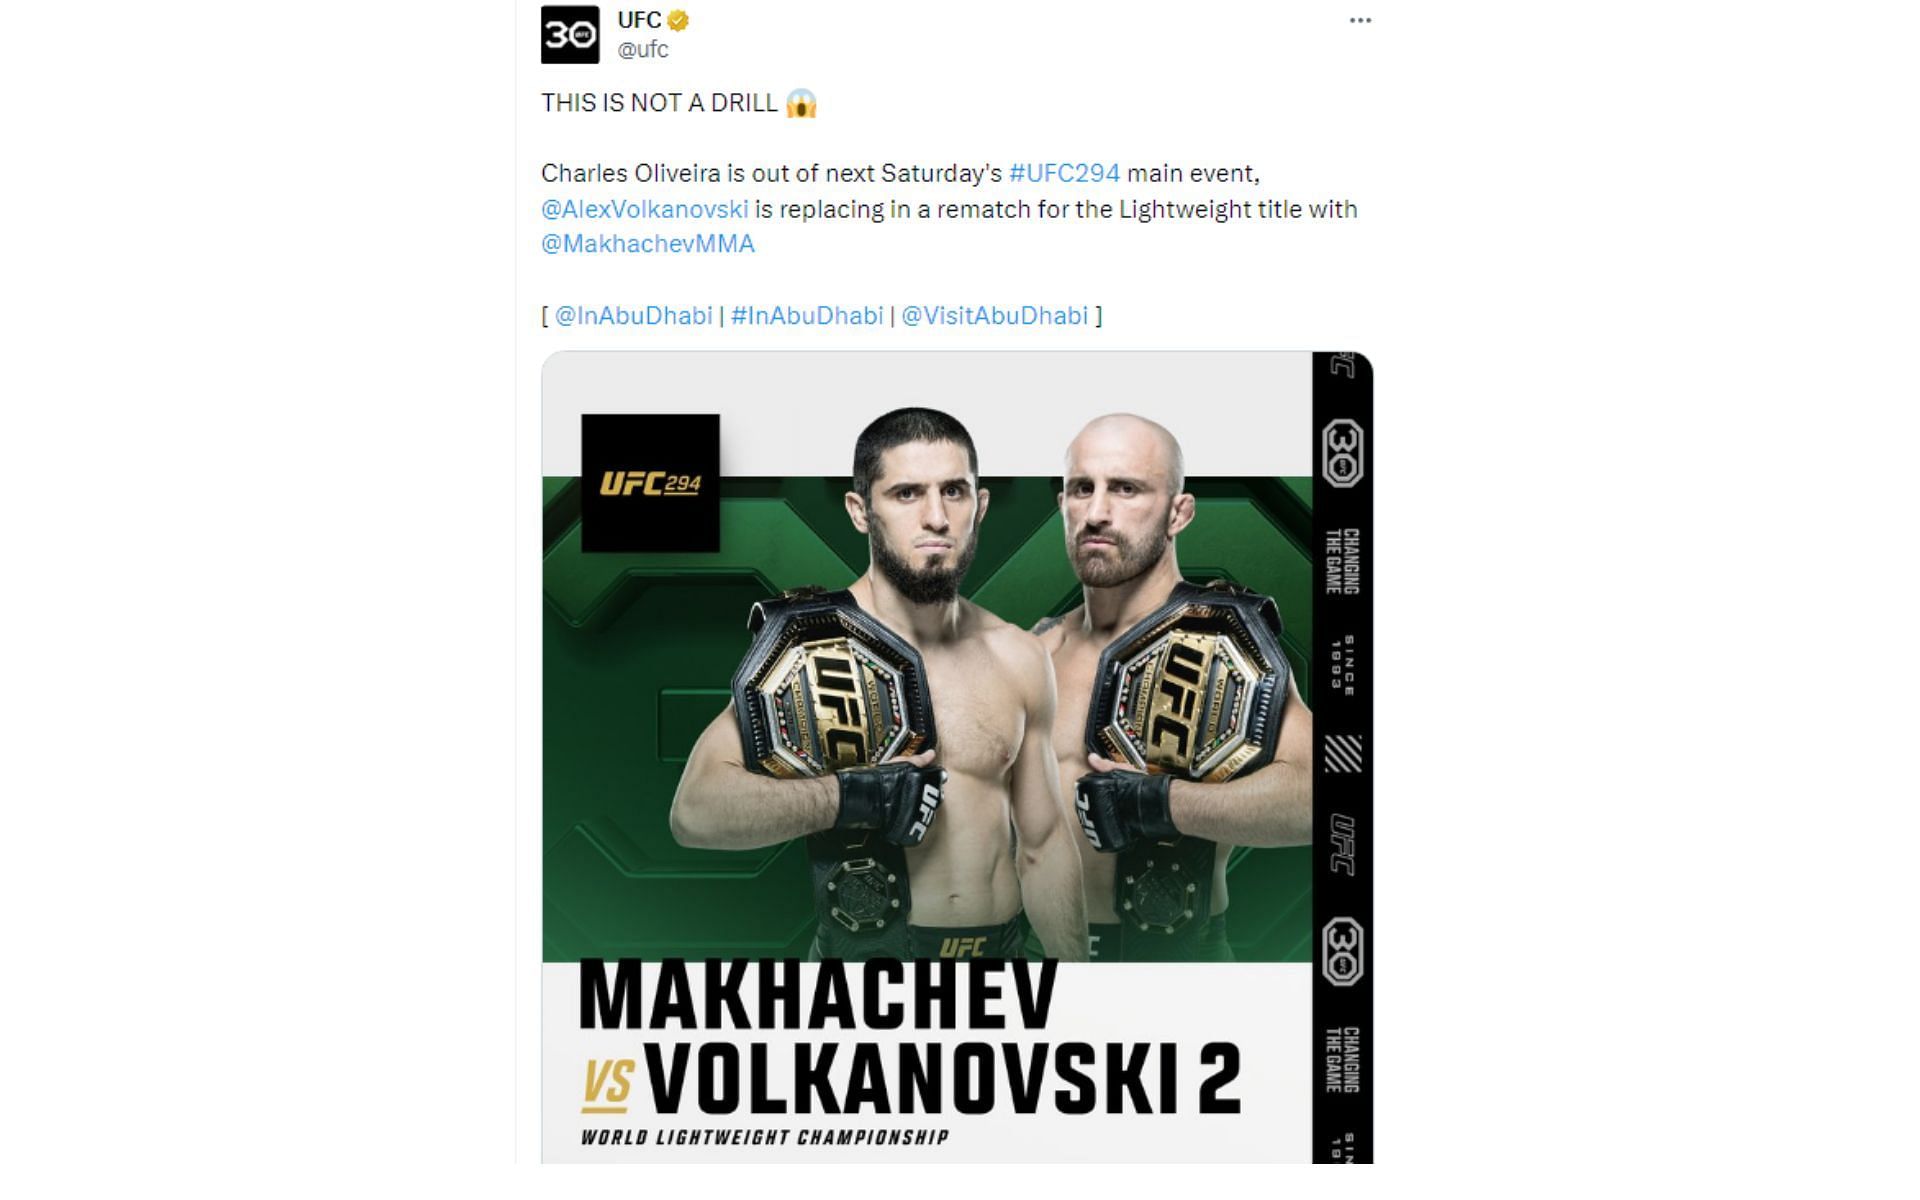 Tweet regarding UFC 294 main event